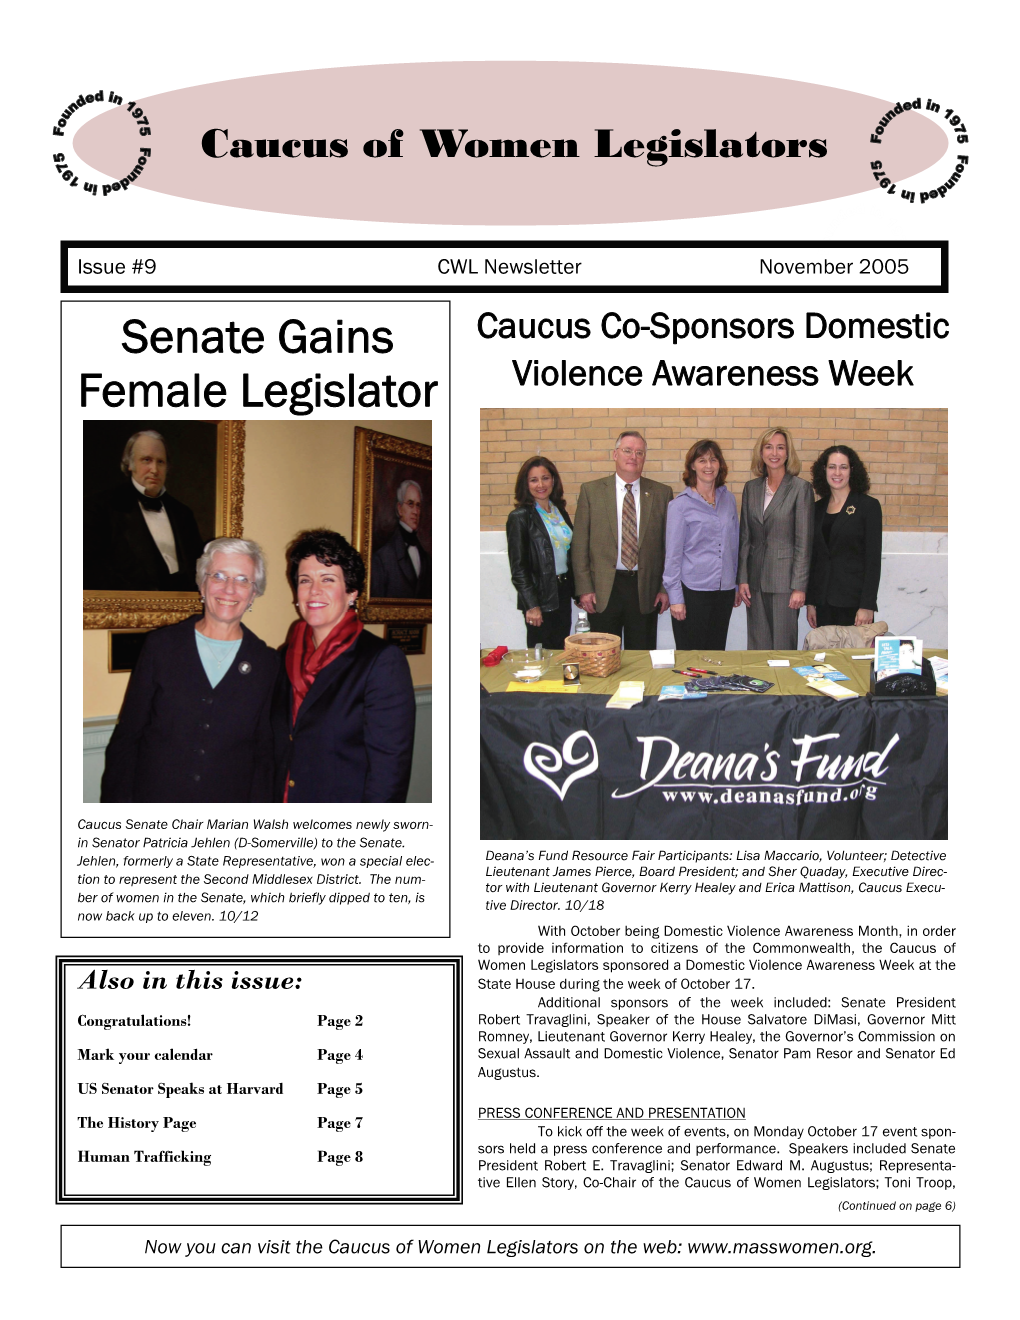 Senate Gains Female Legislator